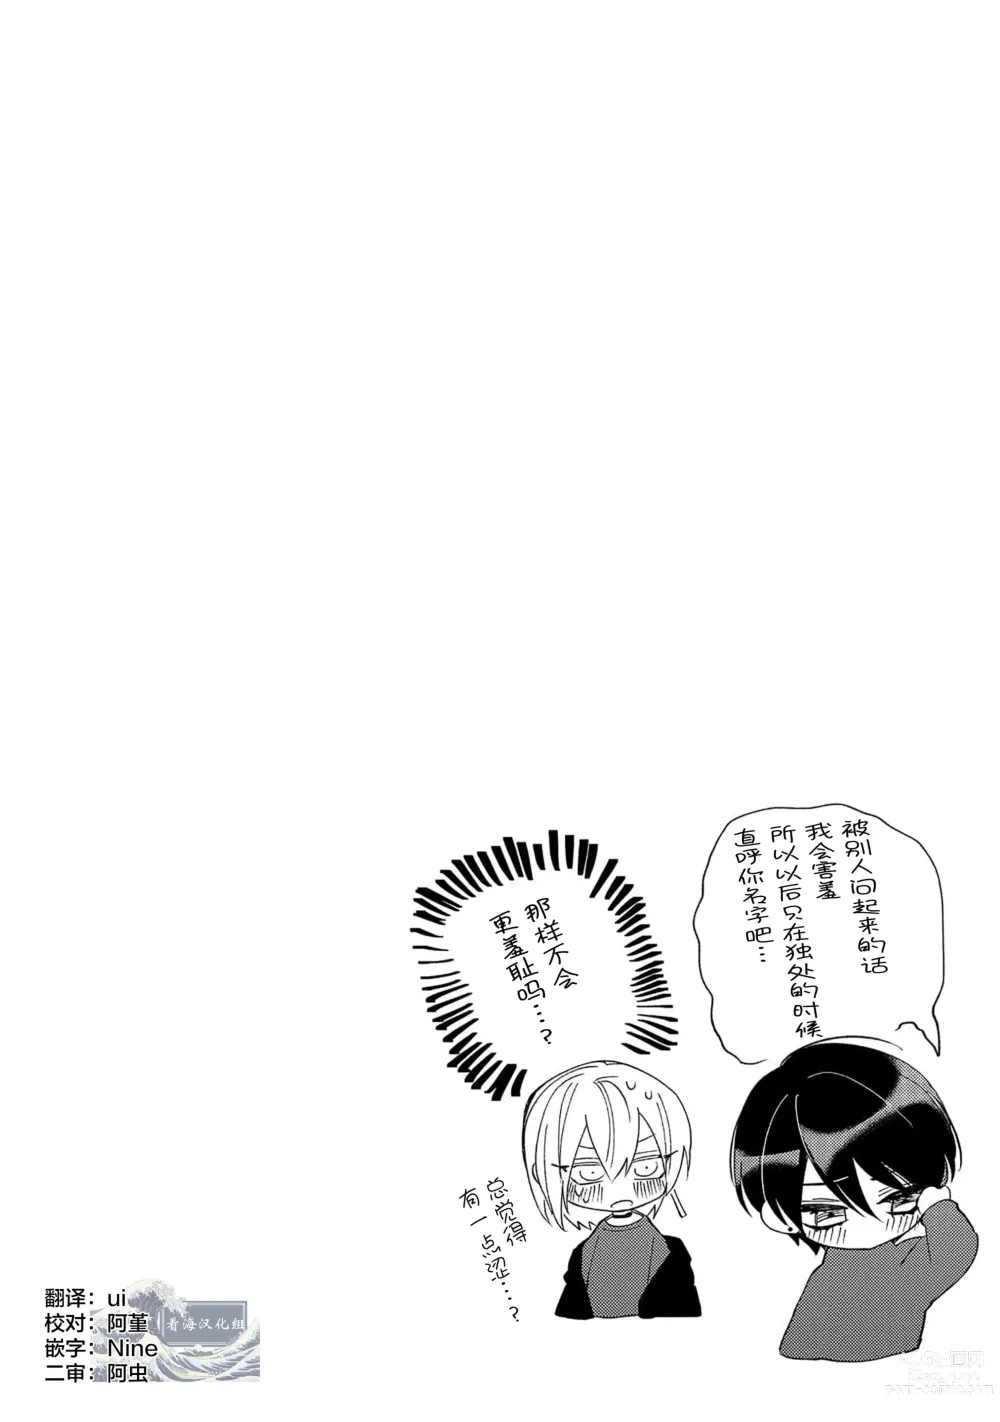 Page 156 of manga 虽说不善恋爱